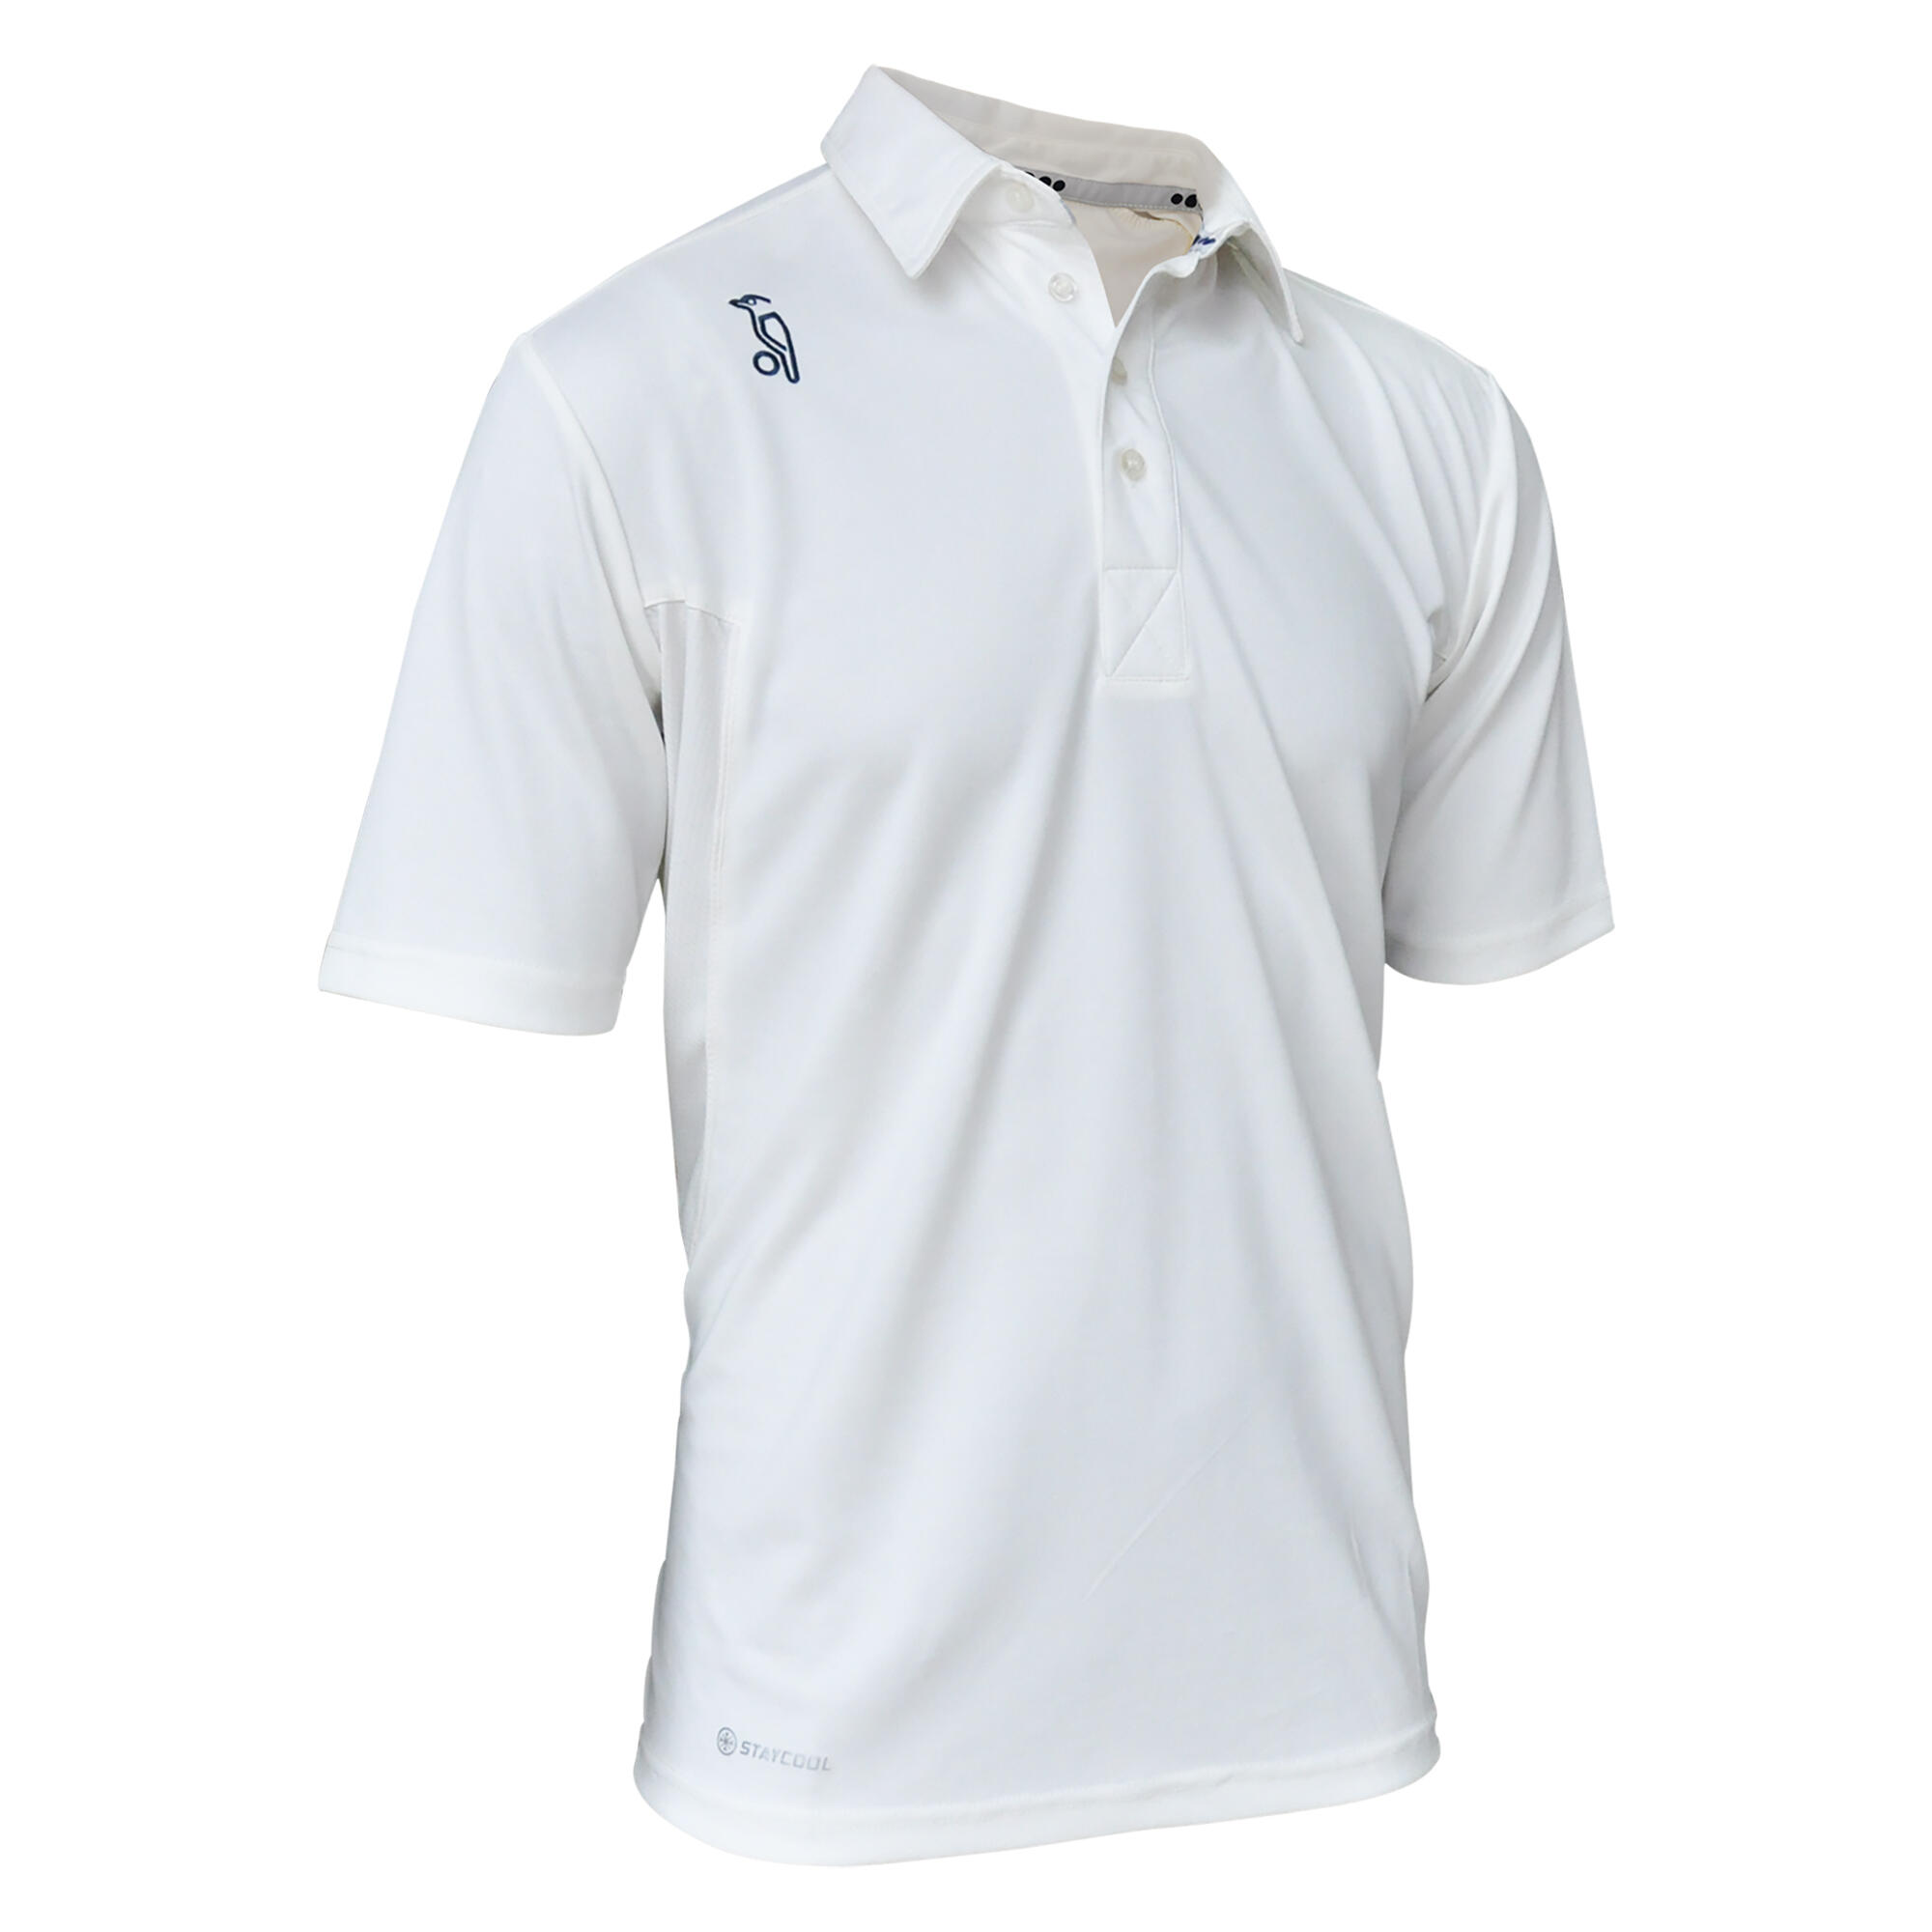 Kookaburra Pro Player Junior Cricket Shirt White 1/2